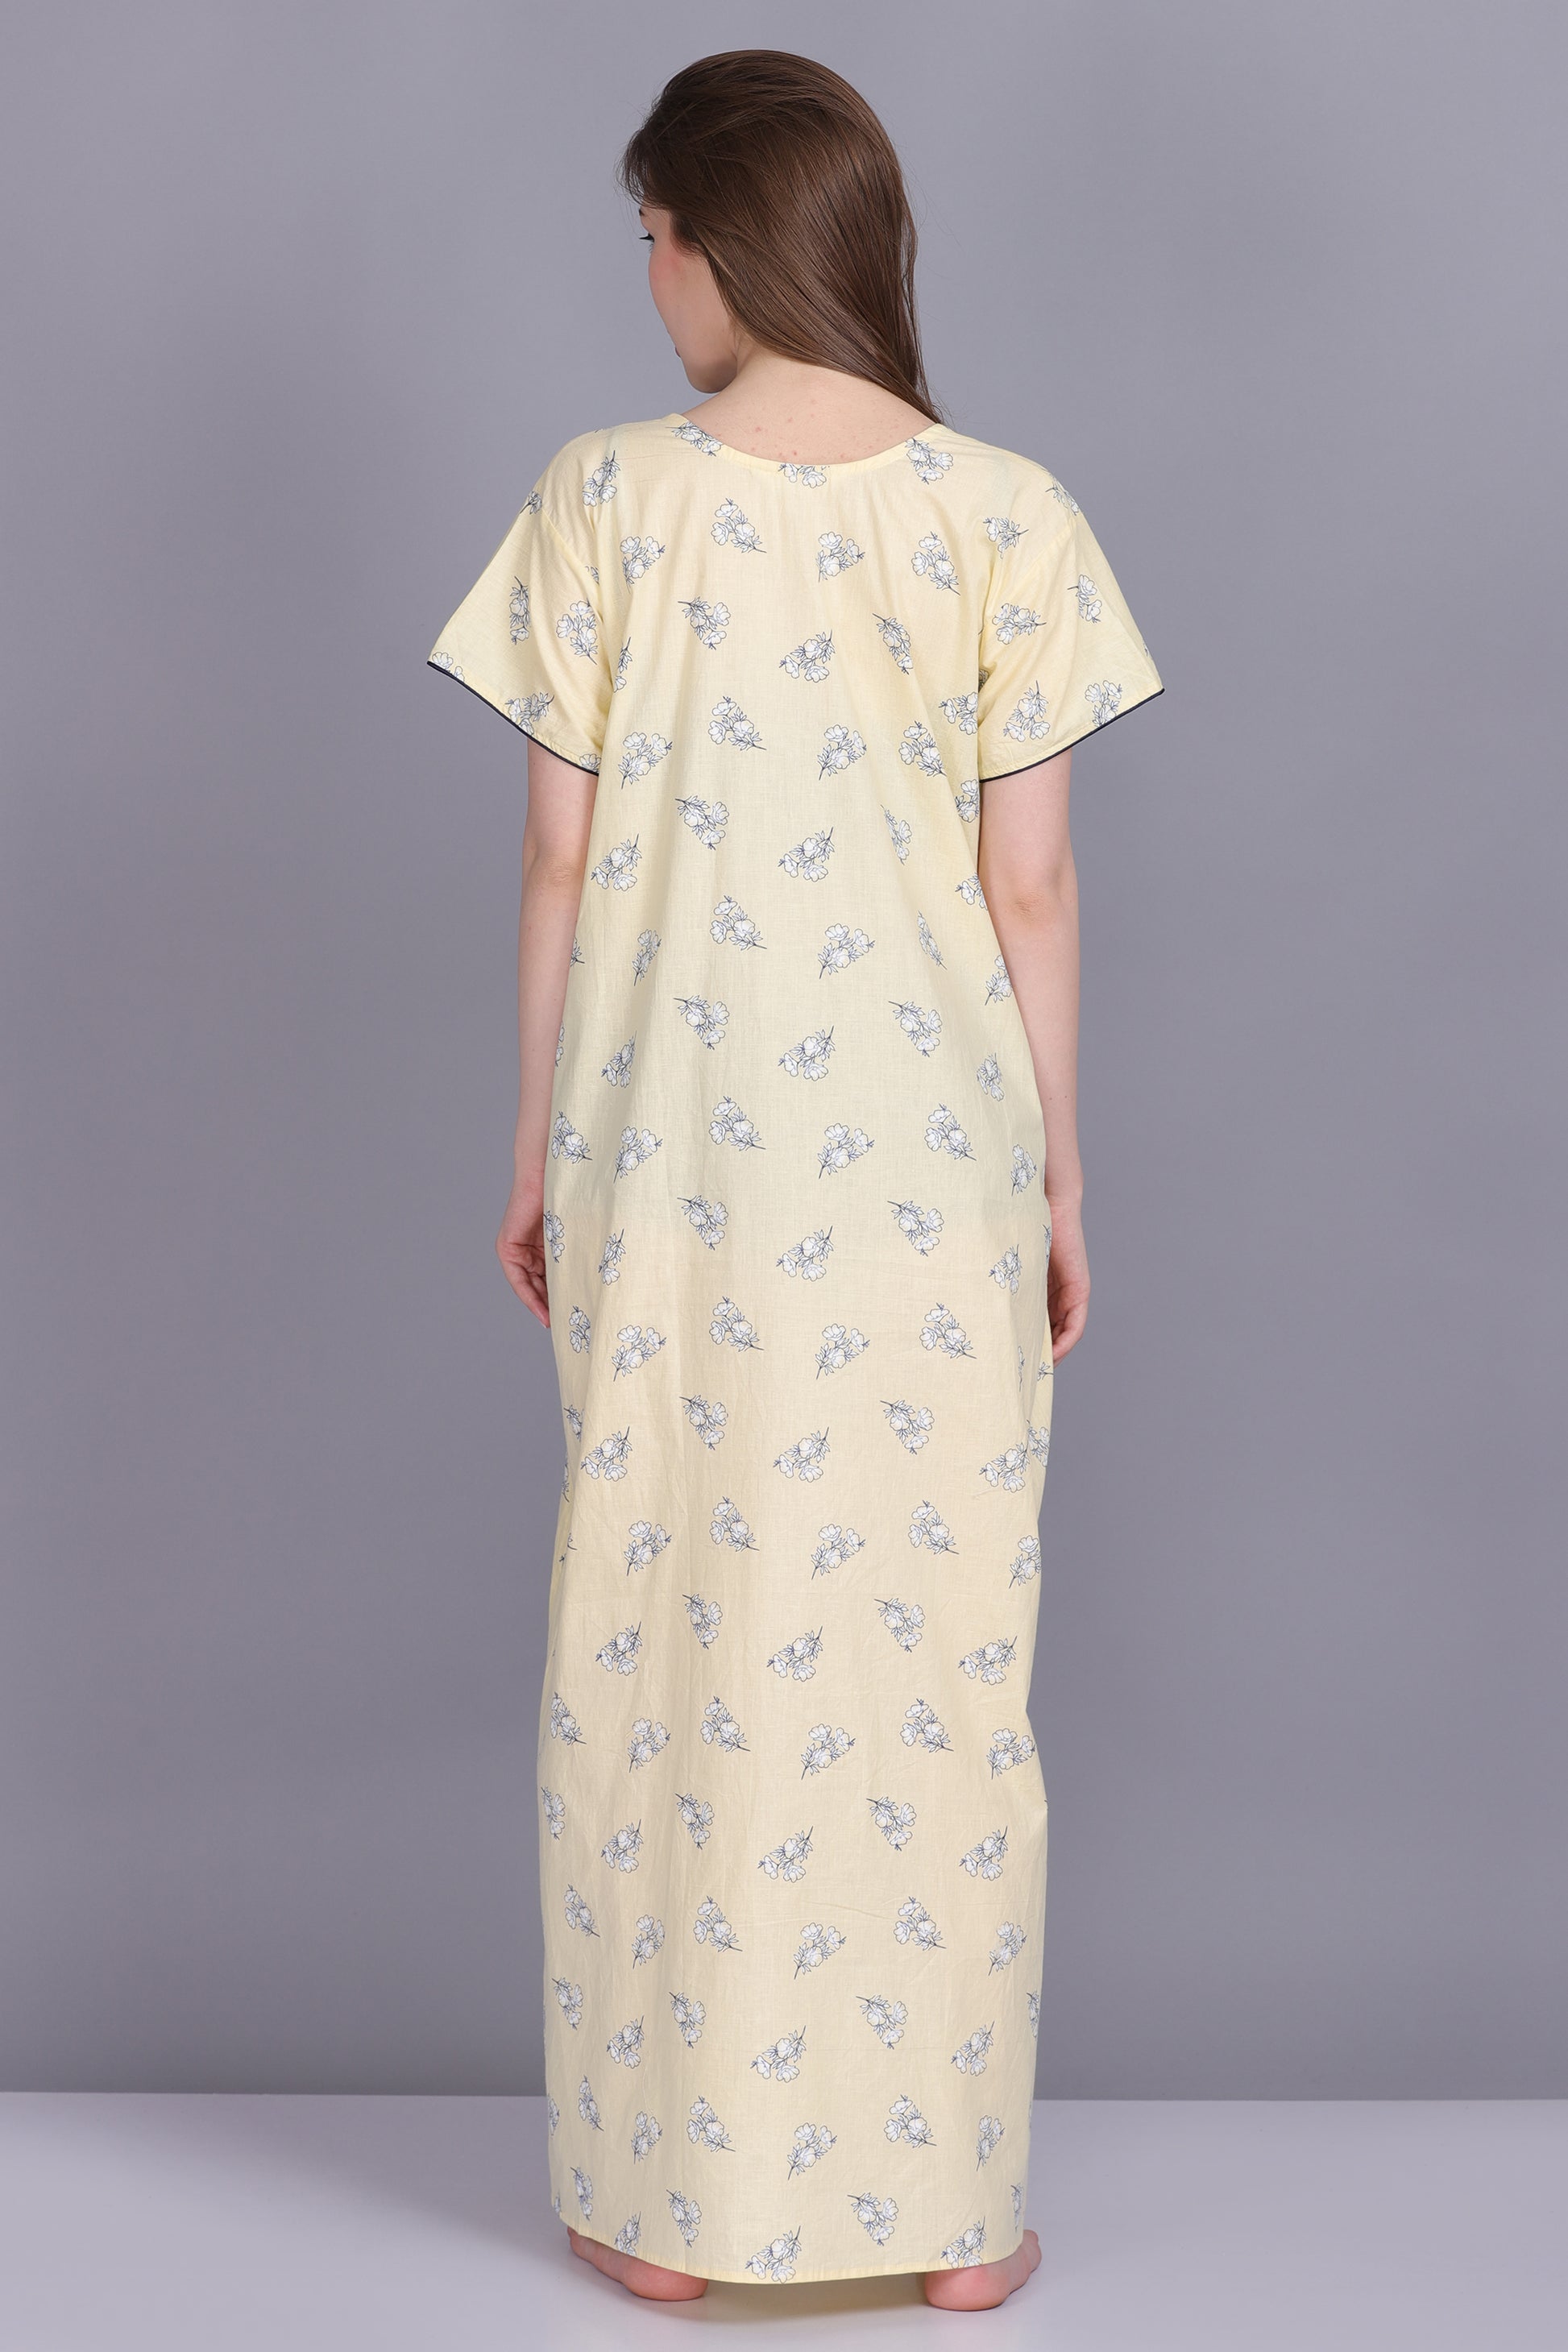 Smarty Pants women's cotton peach color floral print maxi night dress.